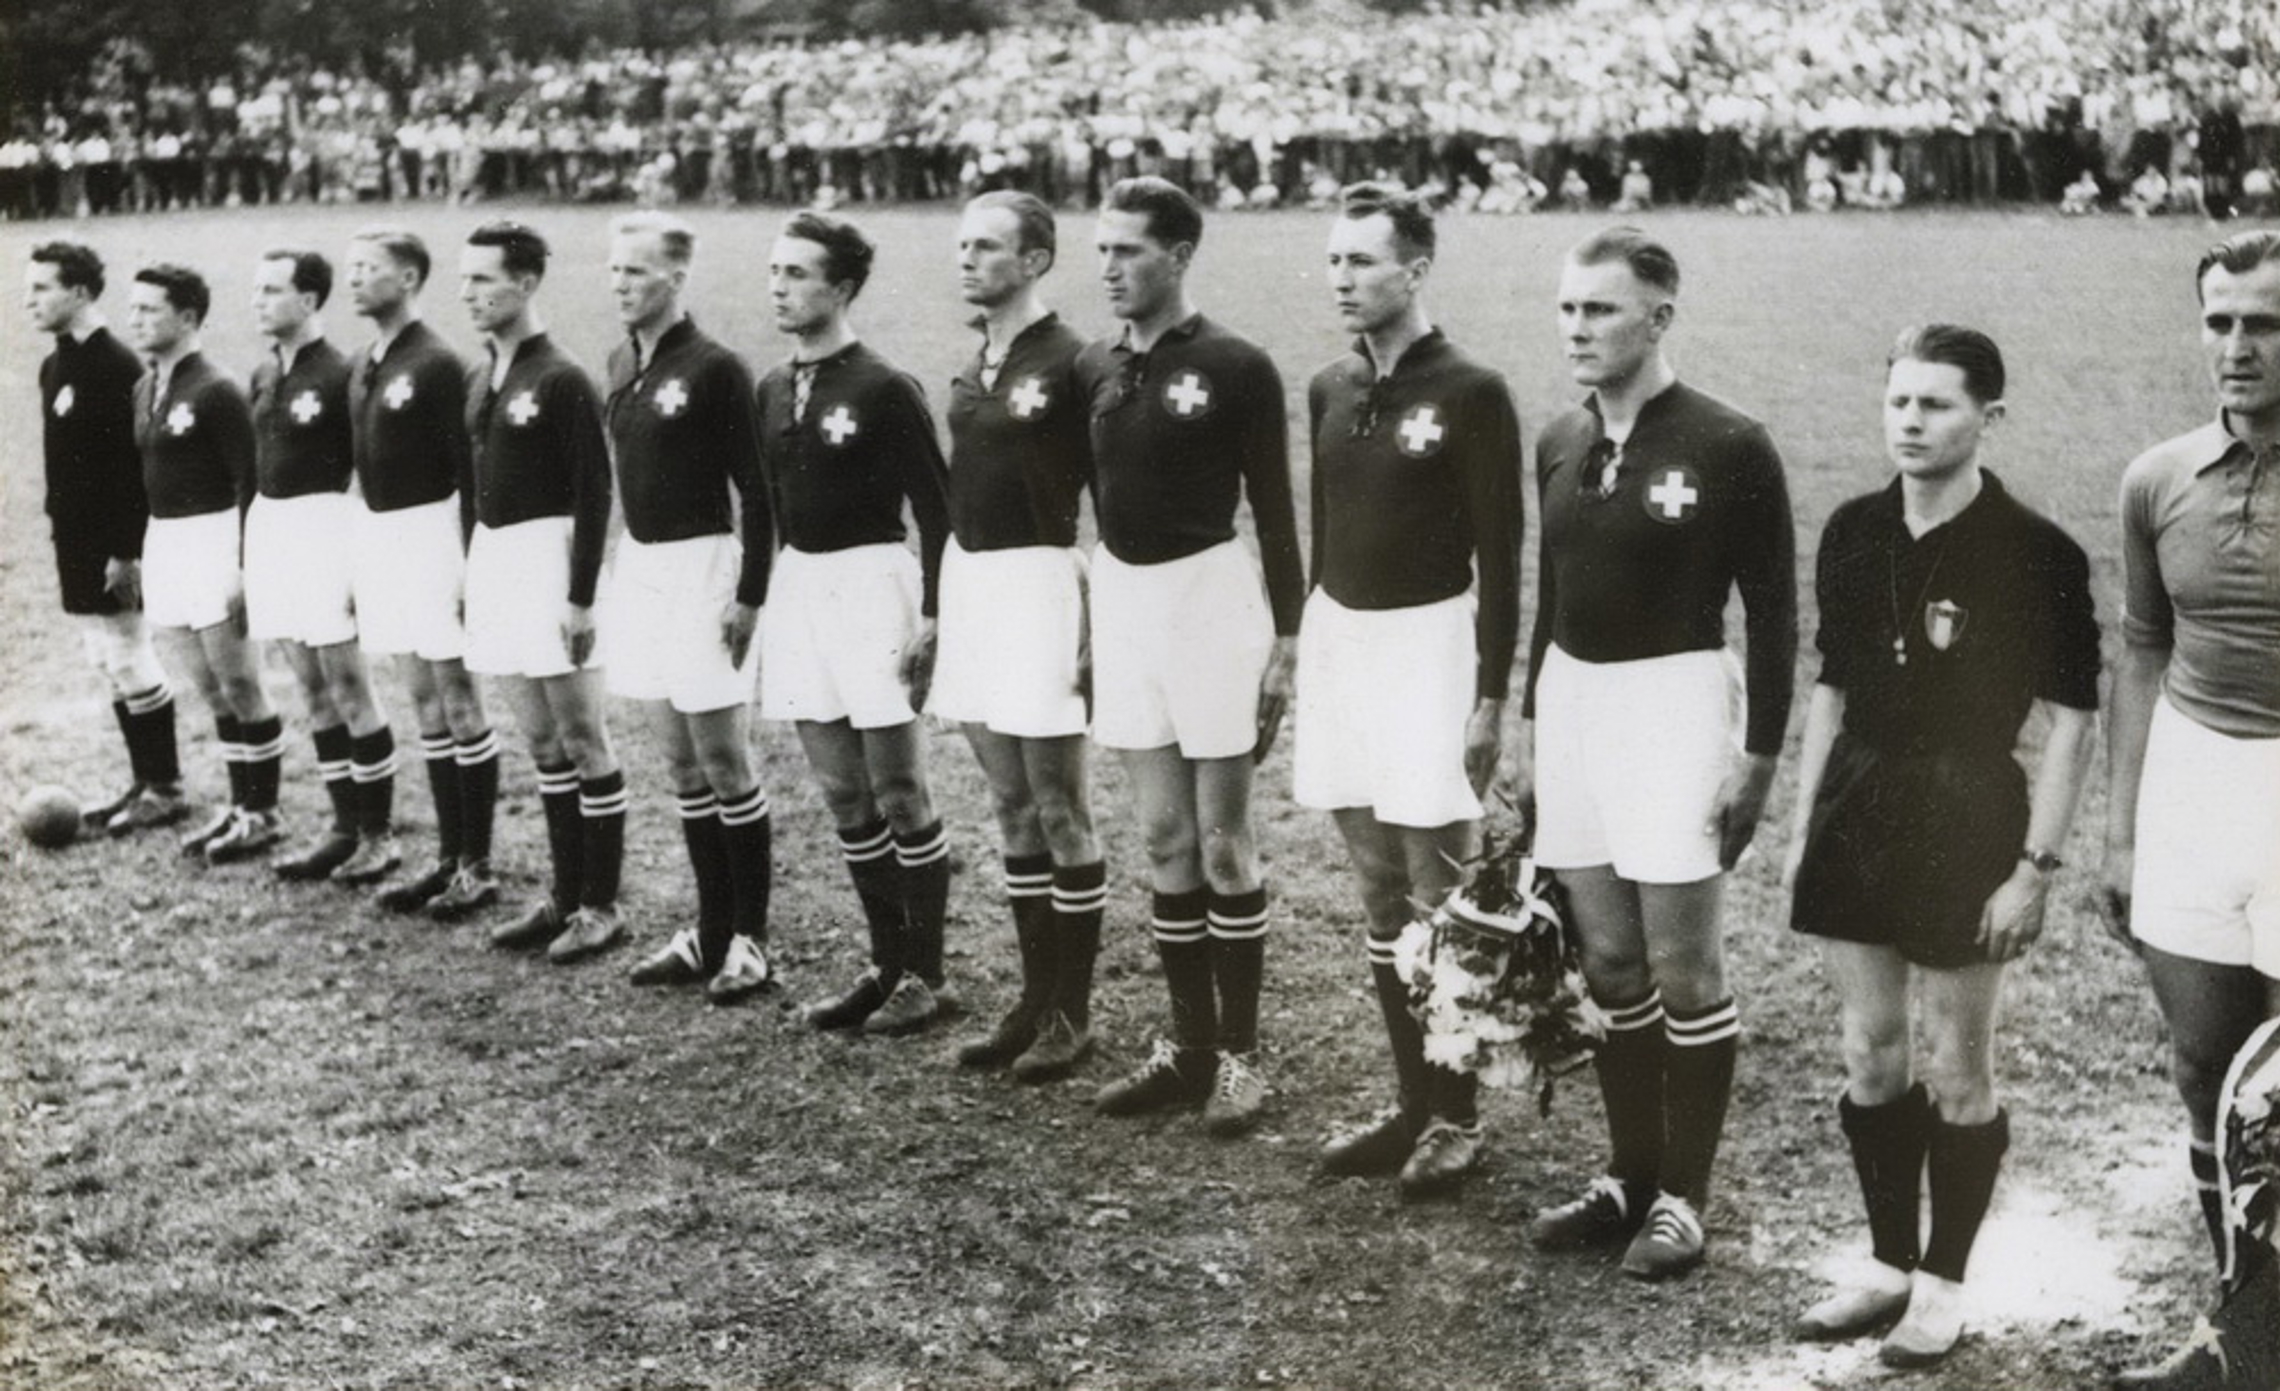 29.5.1949 Schweiz - Dänemark 9:11 (7:3) Winterthur, Stadion Schützenwiese, 4700 Zuschauer, Schiedsrichter Jules Martin Mulhouse FRA